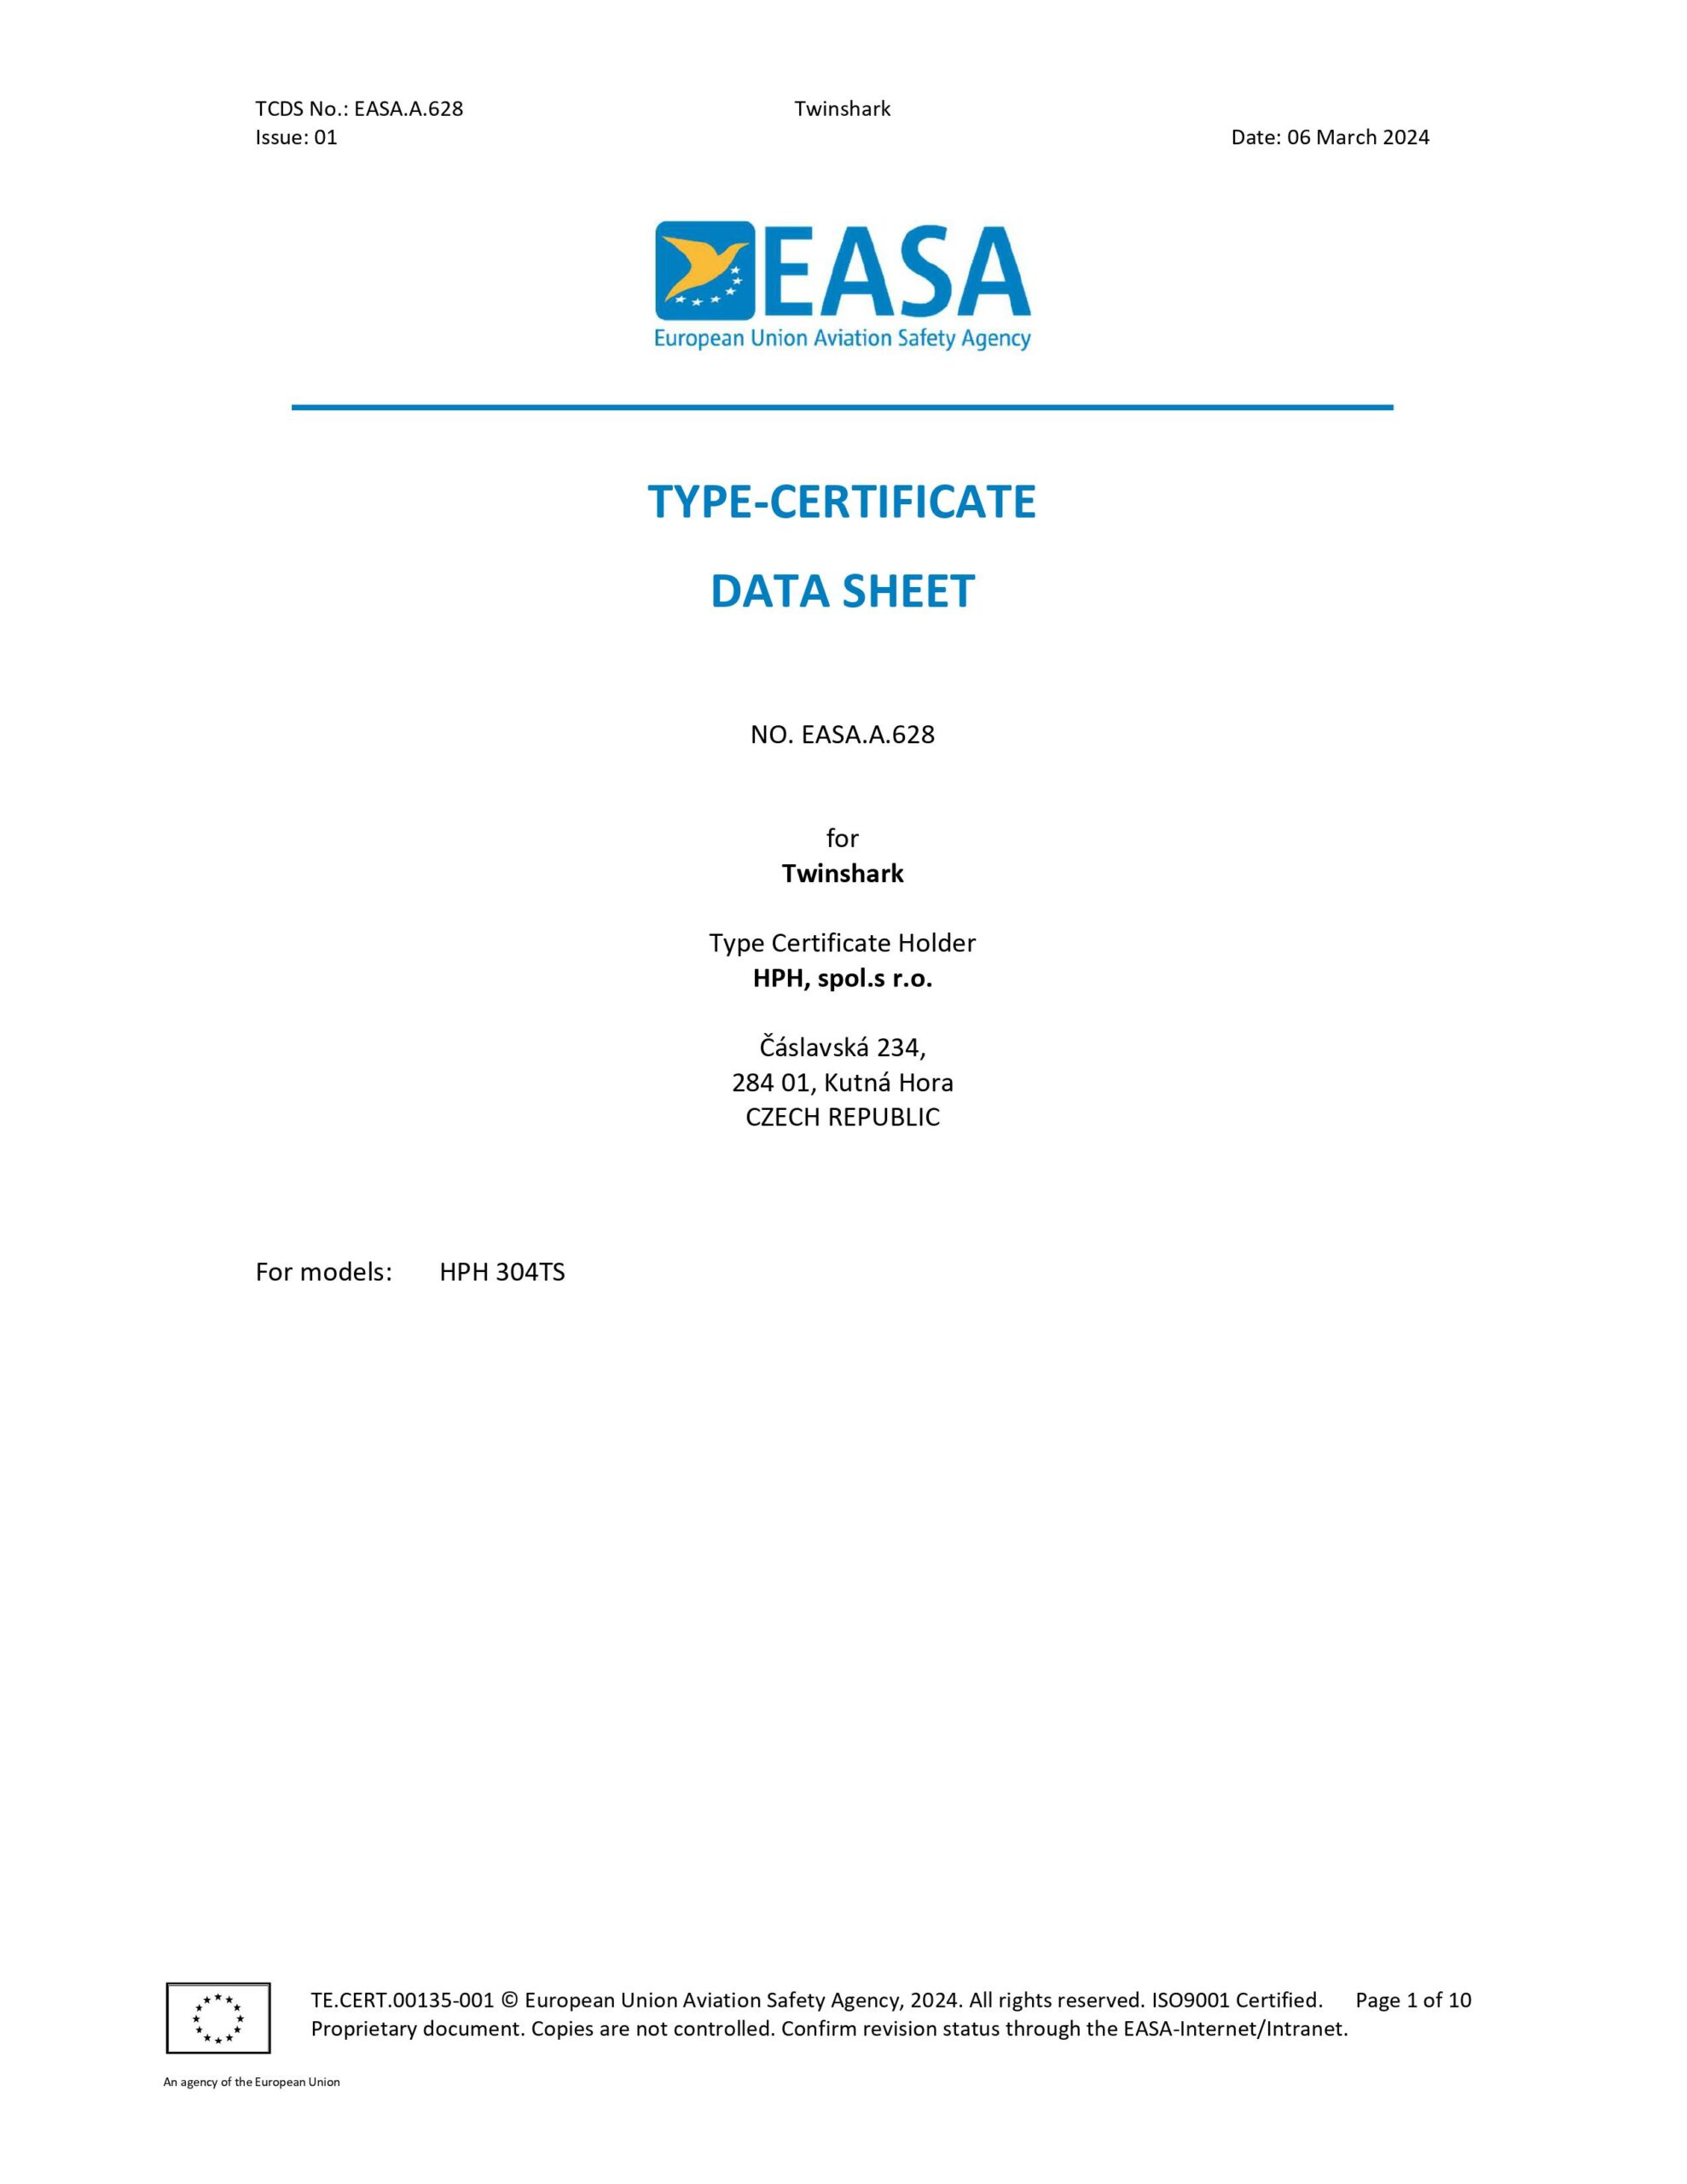 TwinShark is EASA certified!